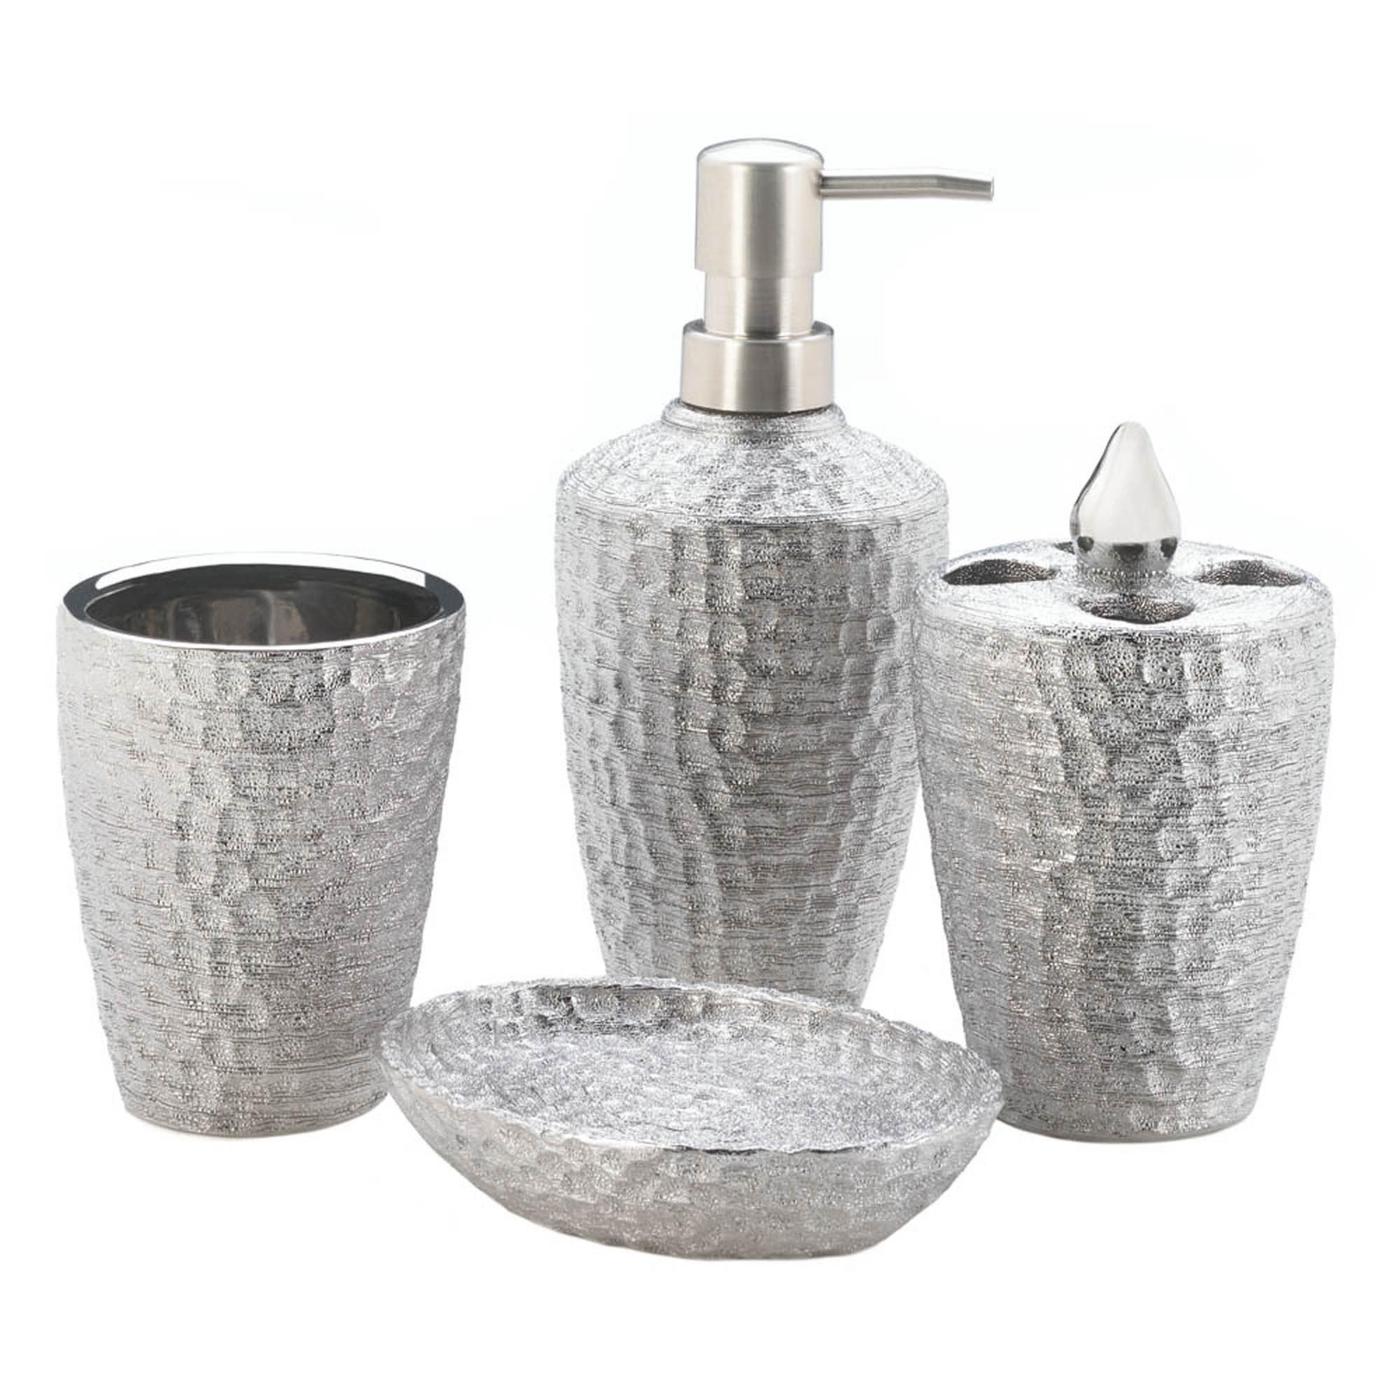 Hammered-Texture Silver Porcelain Bath Set